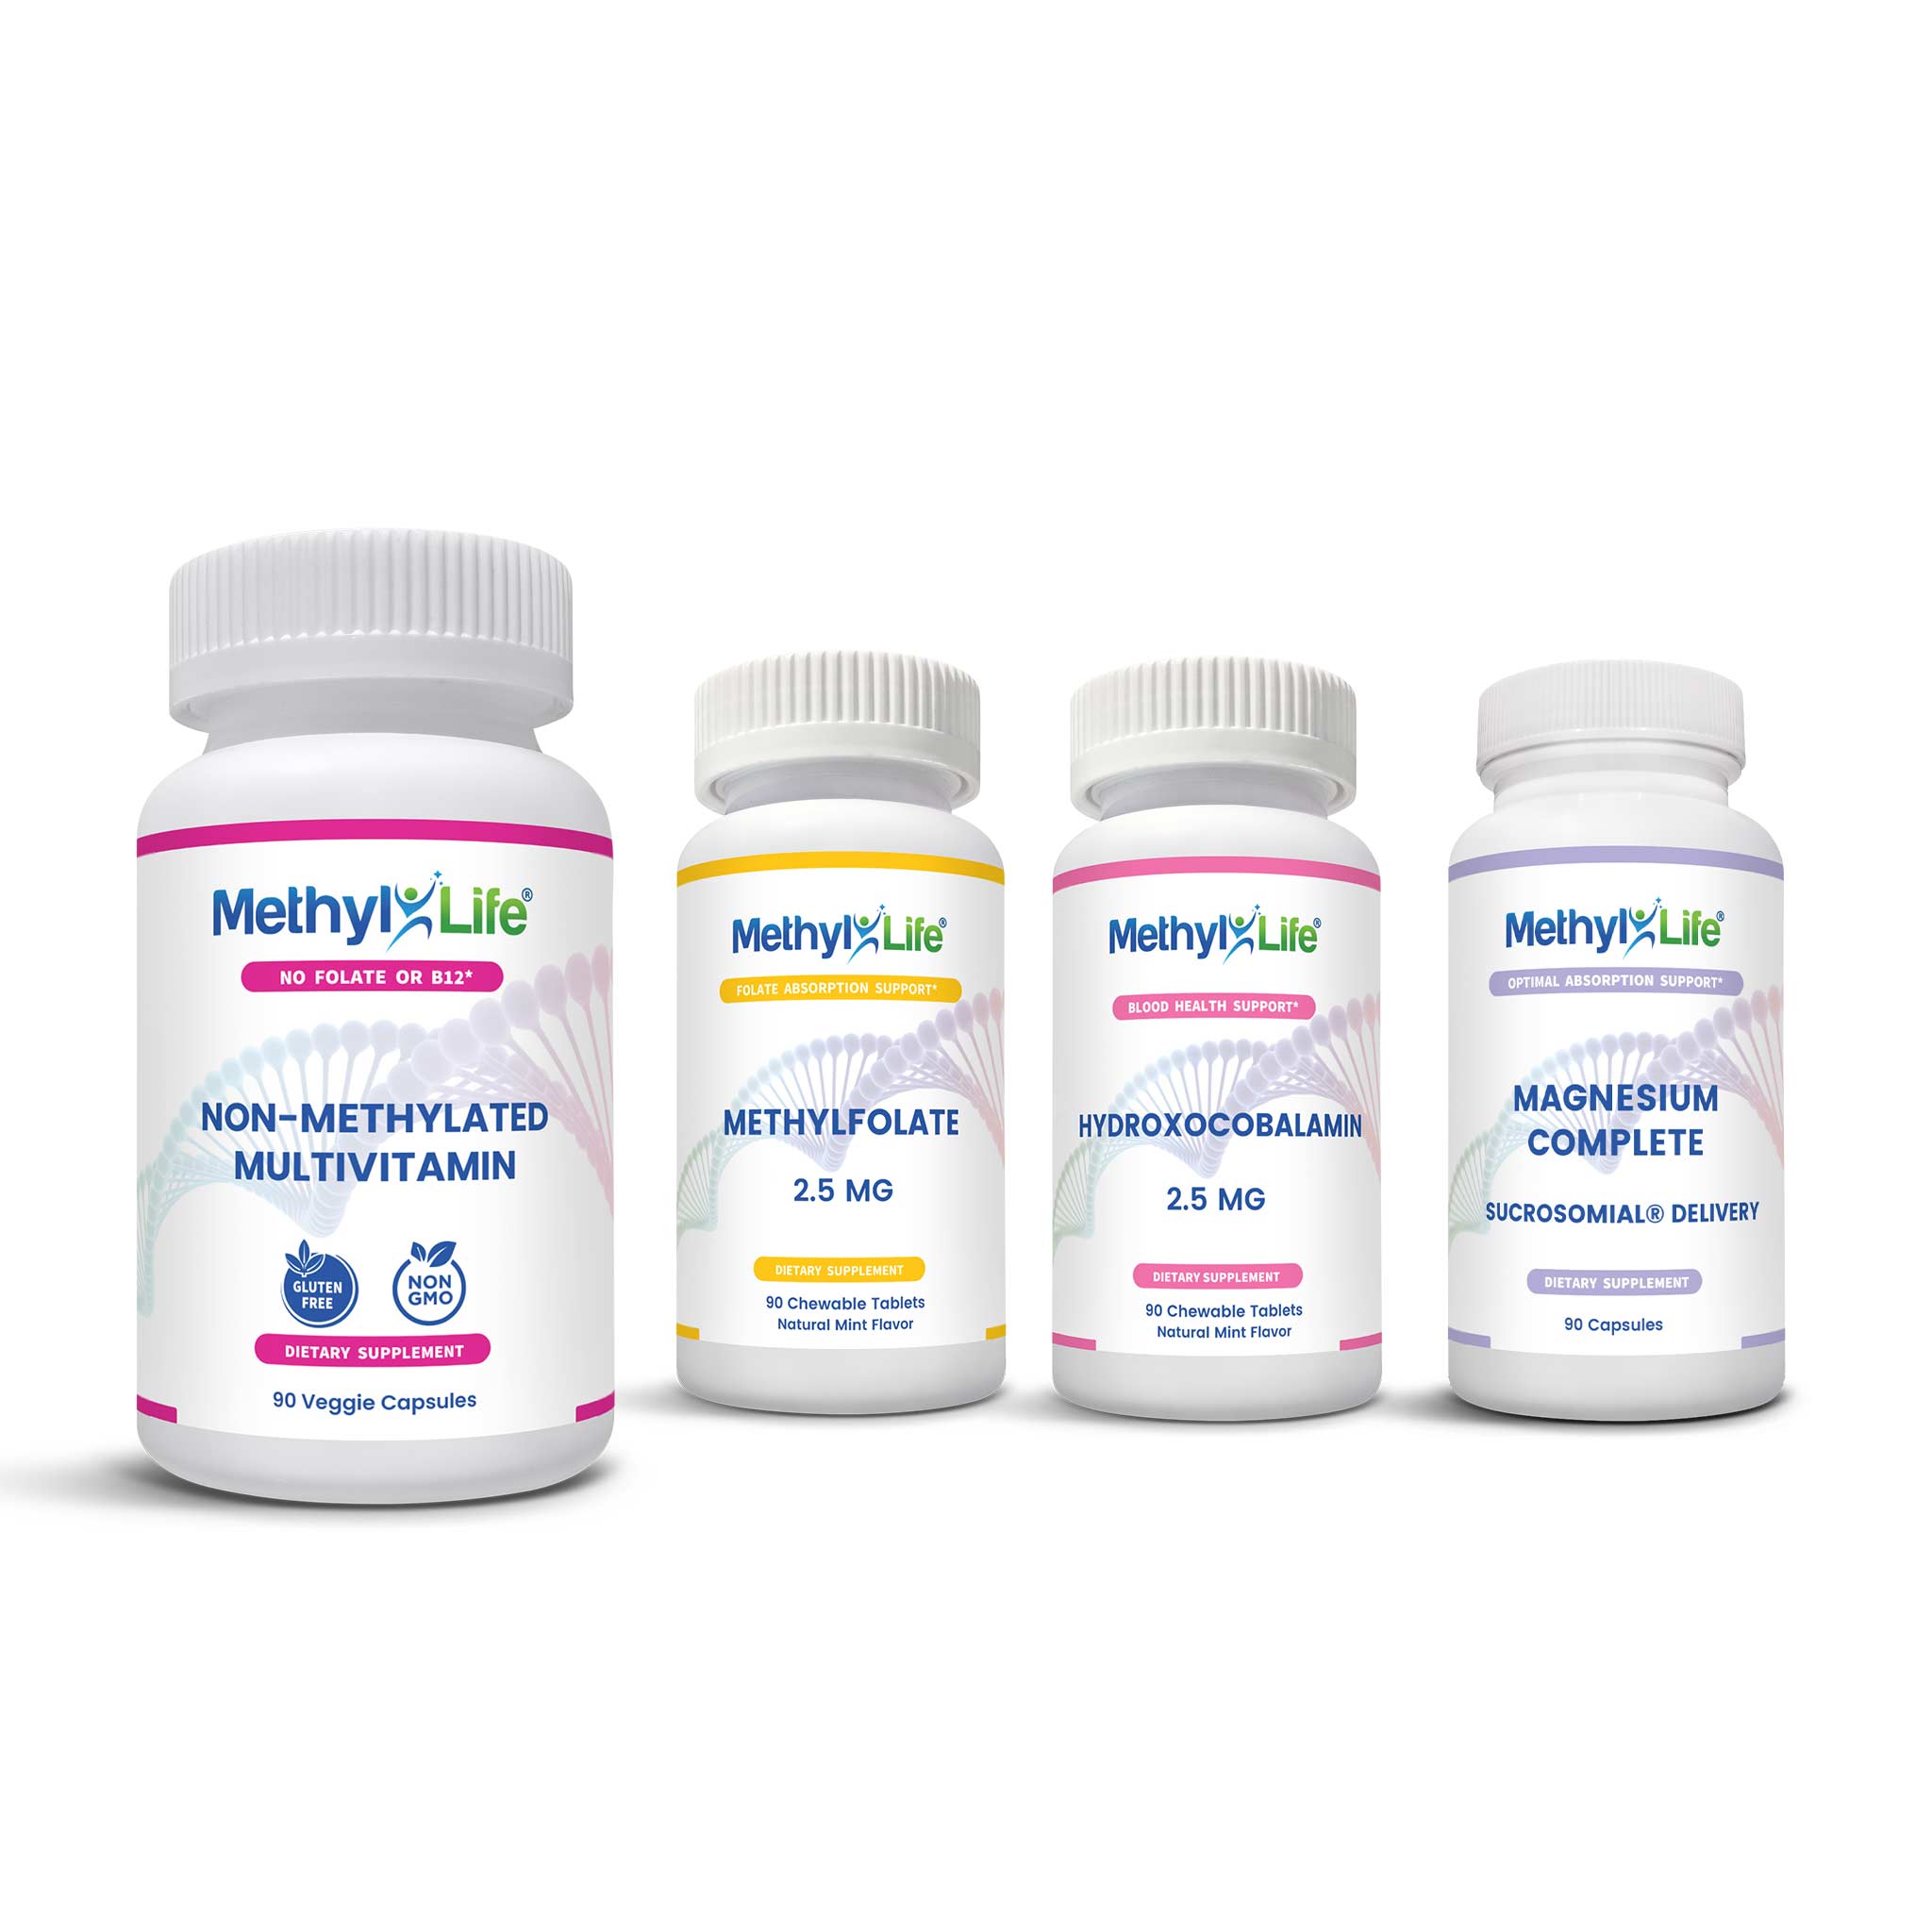 MTHFR Beginner's Bundle (4 product bottles) - L-Methylfolate 2.5, Active B12, Non-Methylated Multi, Magnesium Caps - Methyl-Life